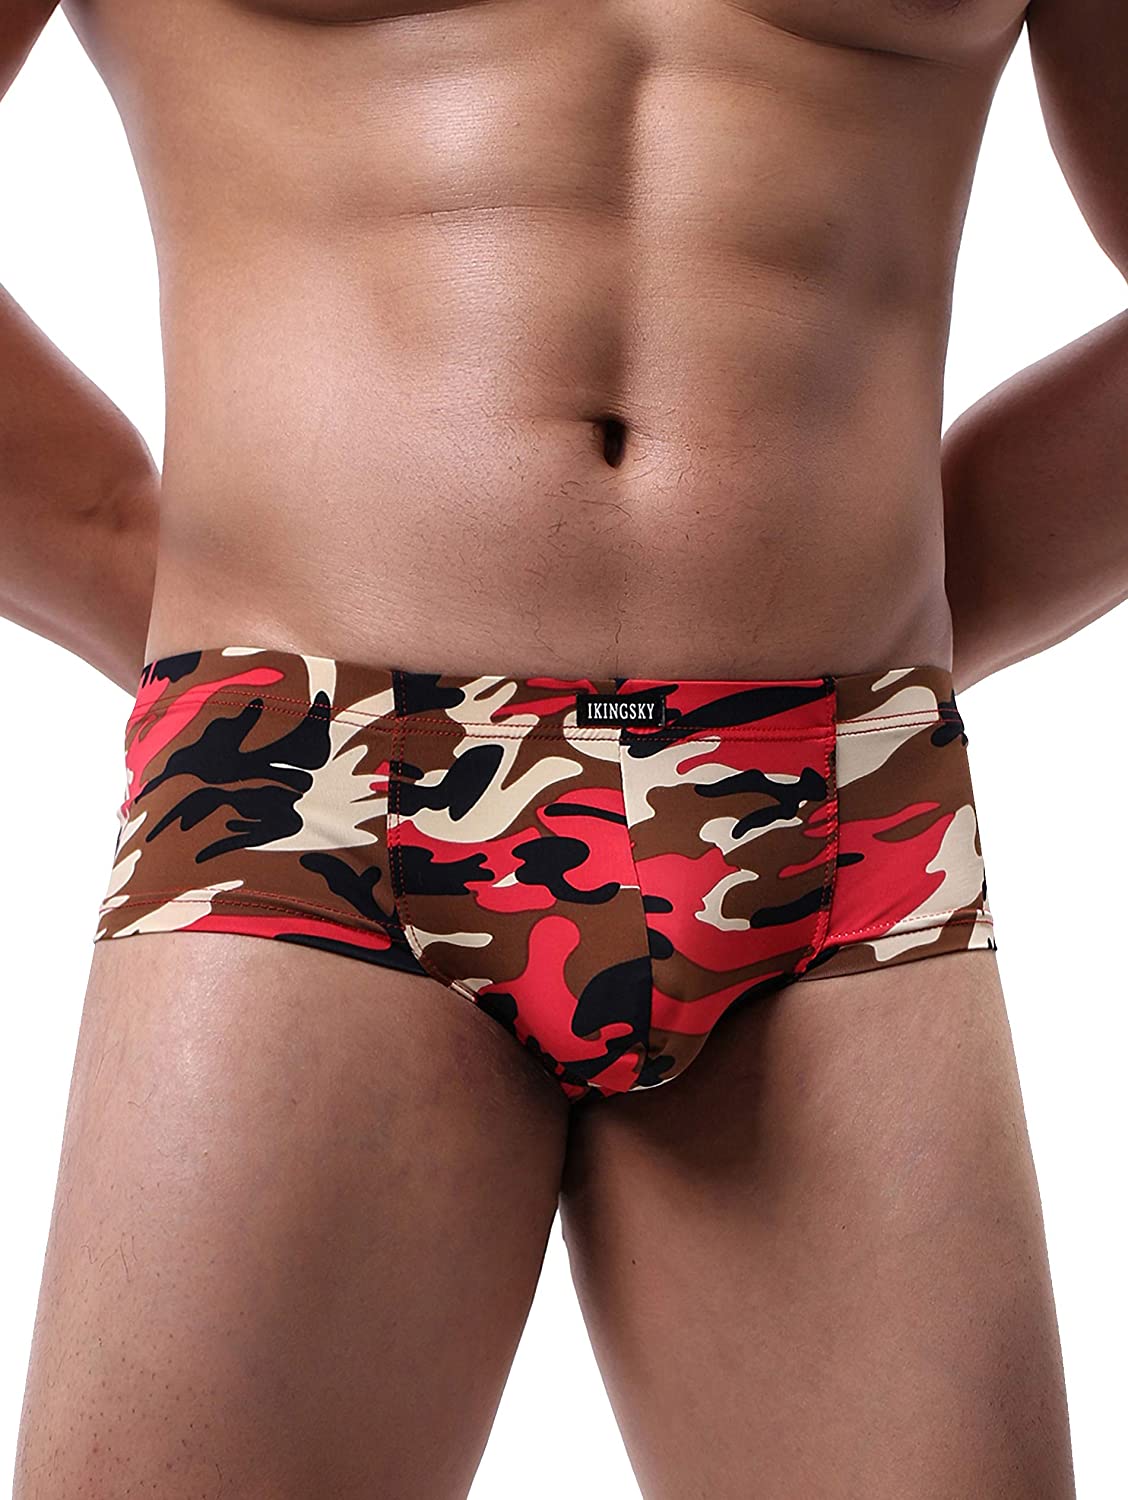 Ikingsky Mens Camouflage Cheeky Boxer Briefs Sexy Mini Cheek Thong